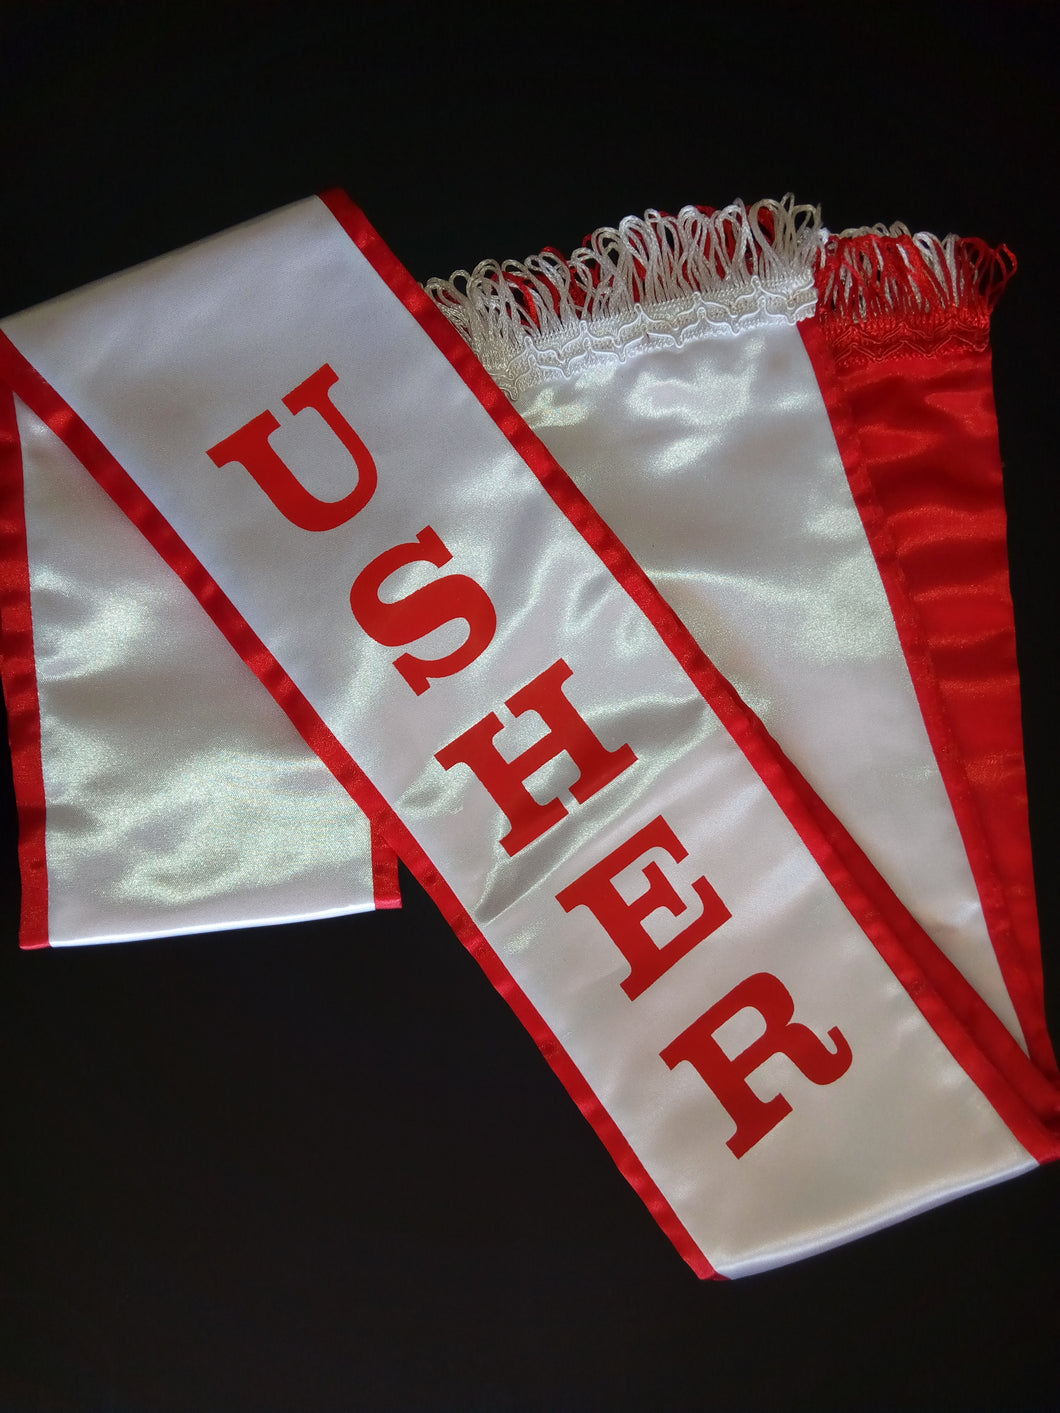 Usher Belt - Red & White (Double-Sided Wear)